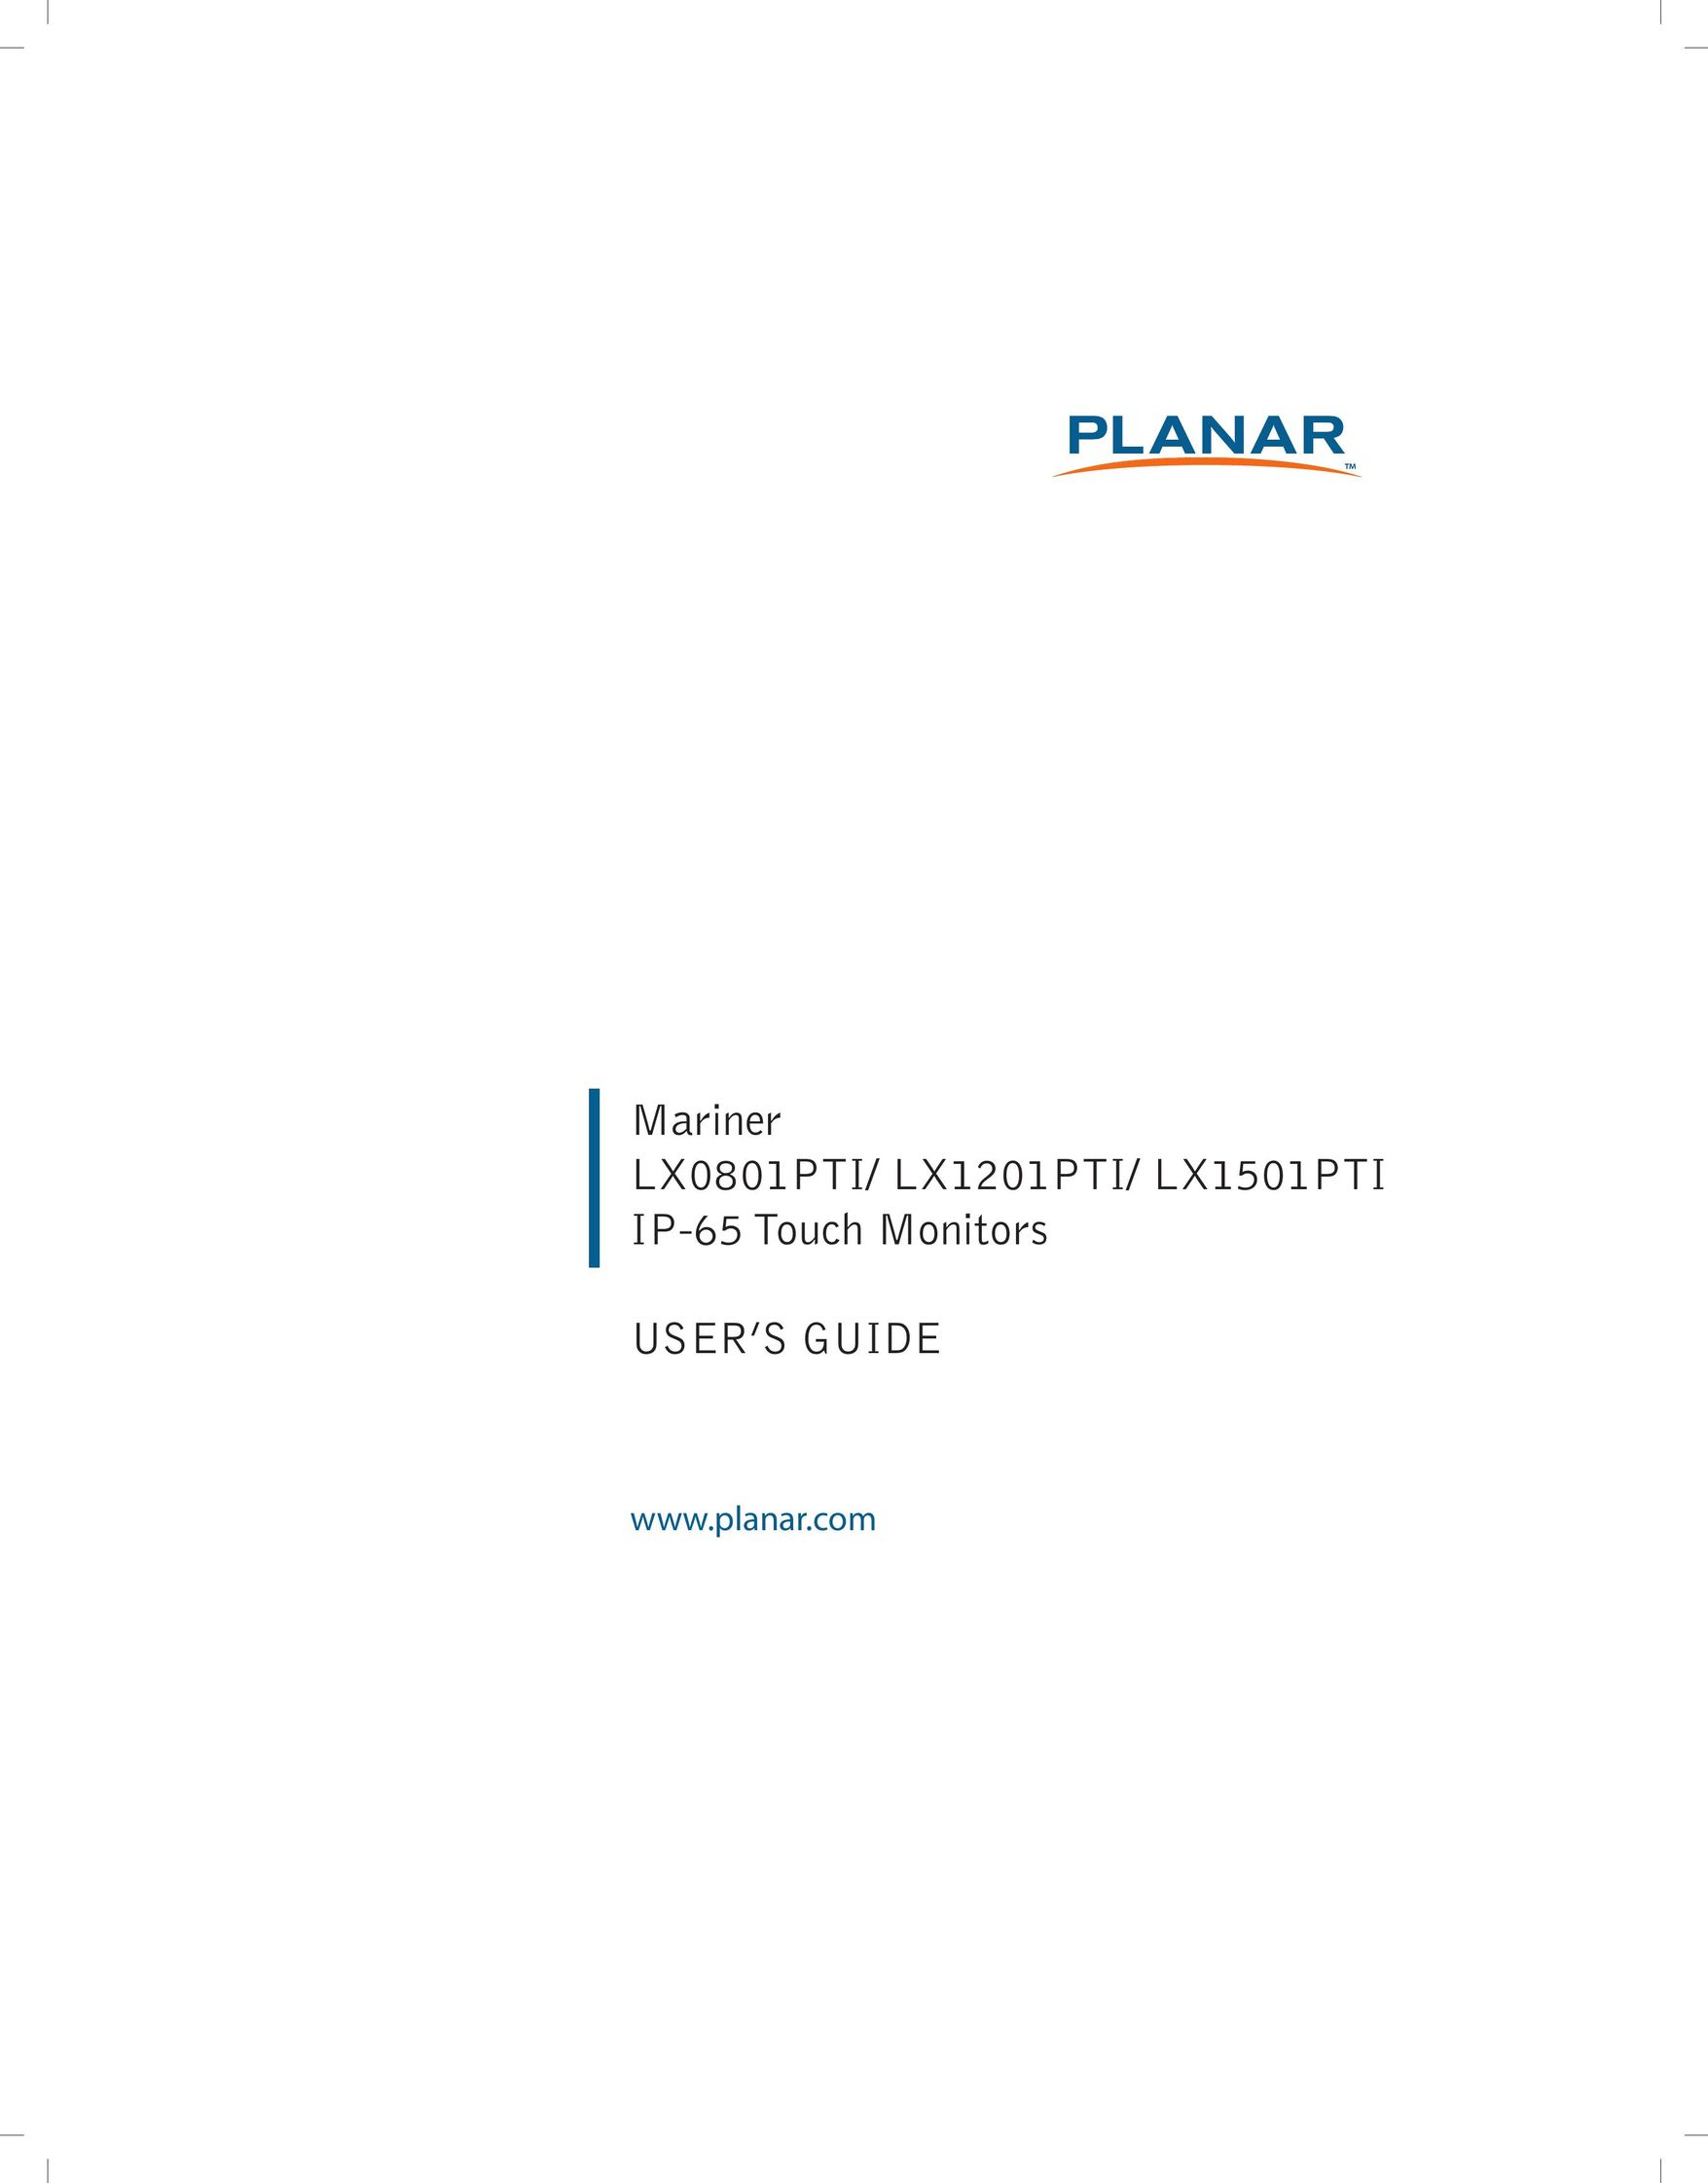 Planar LX1201PTI Car Video System User Manual